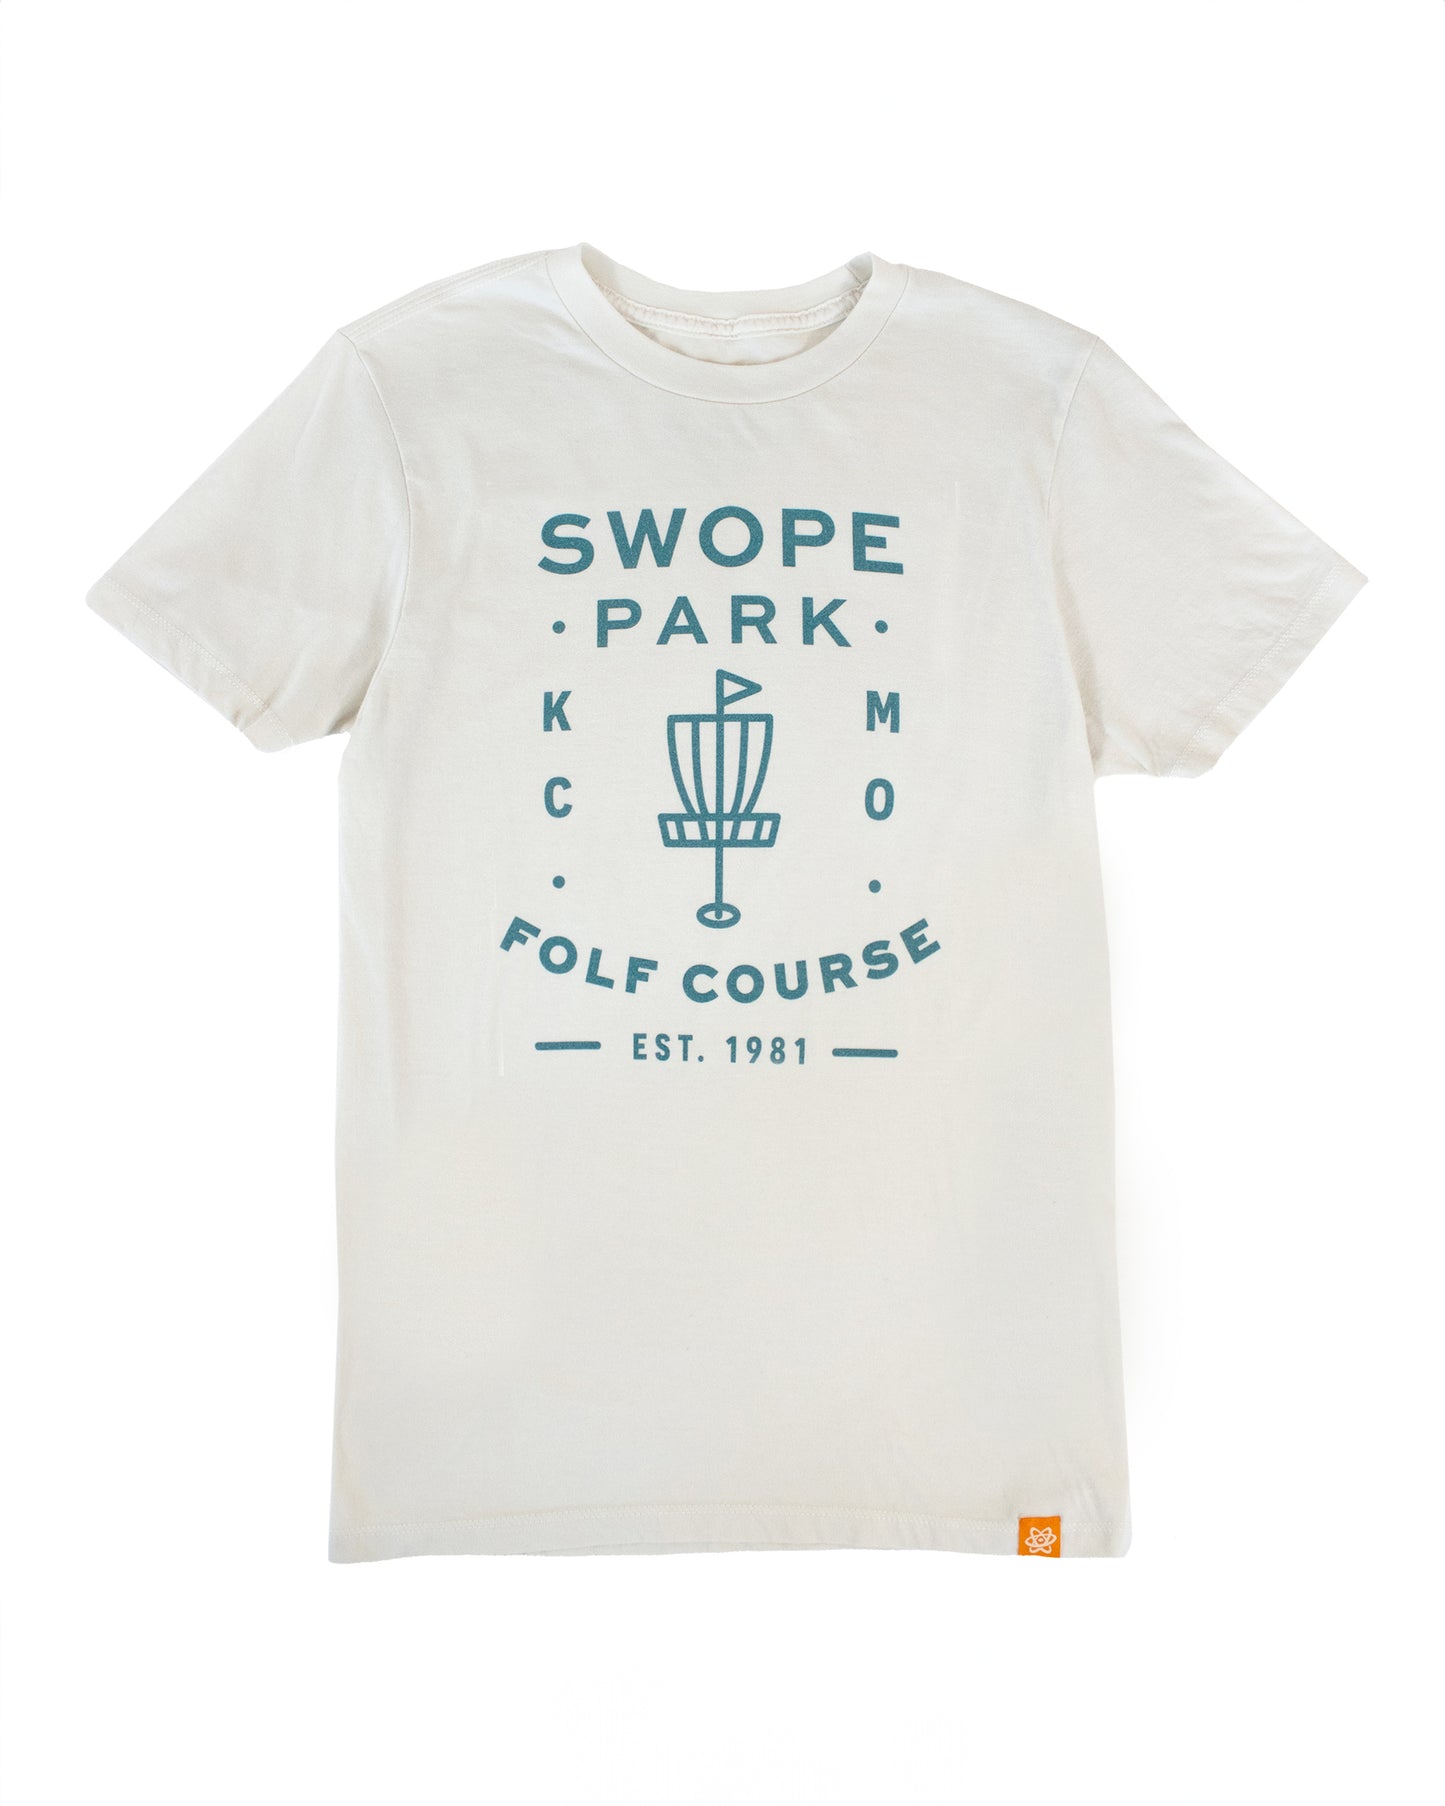 Swope Park Folf Course T-shirt